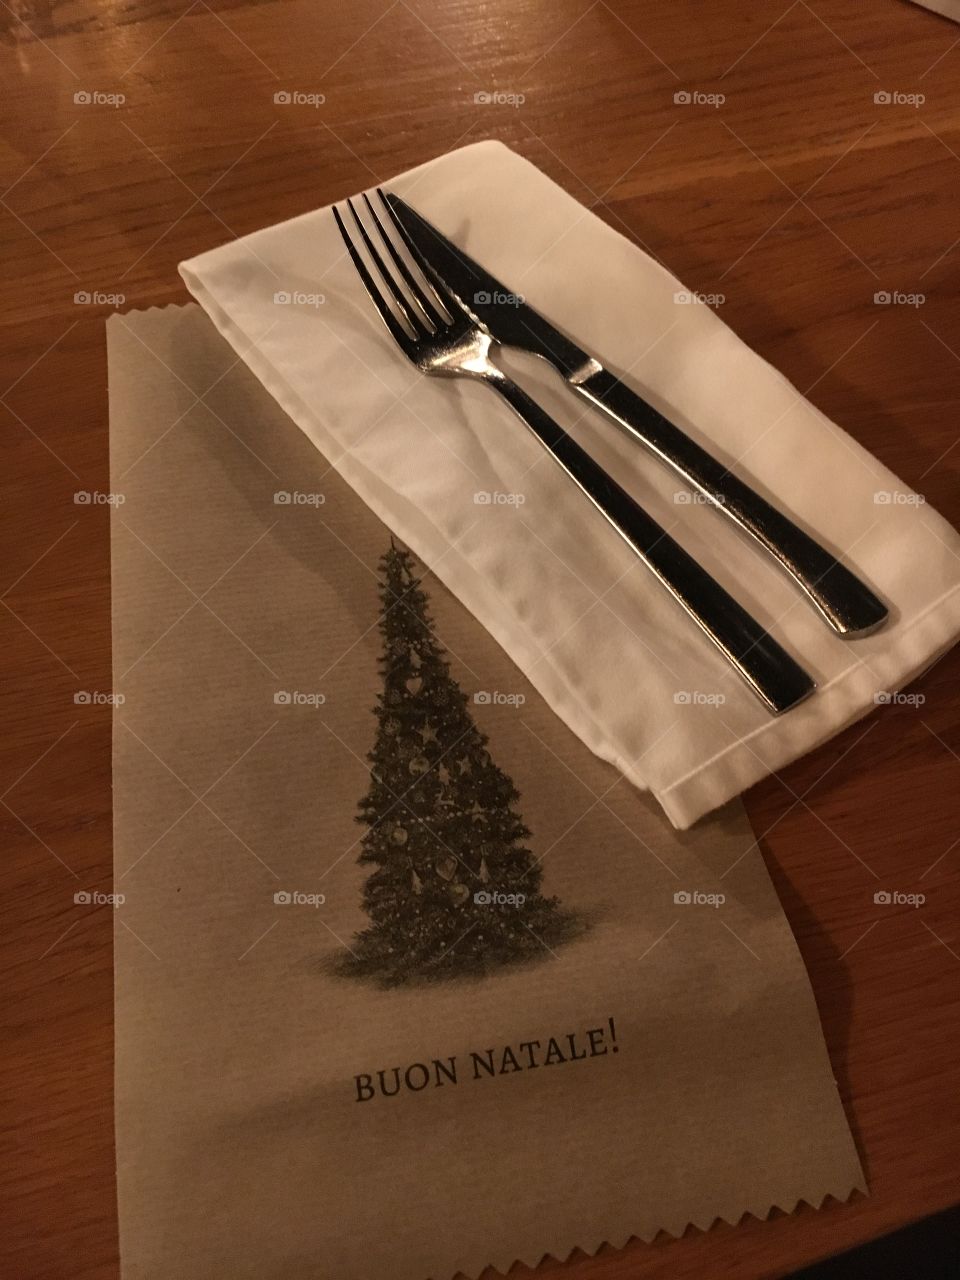 Italian Christmas meal